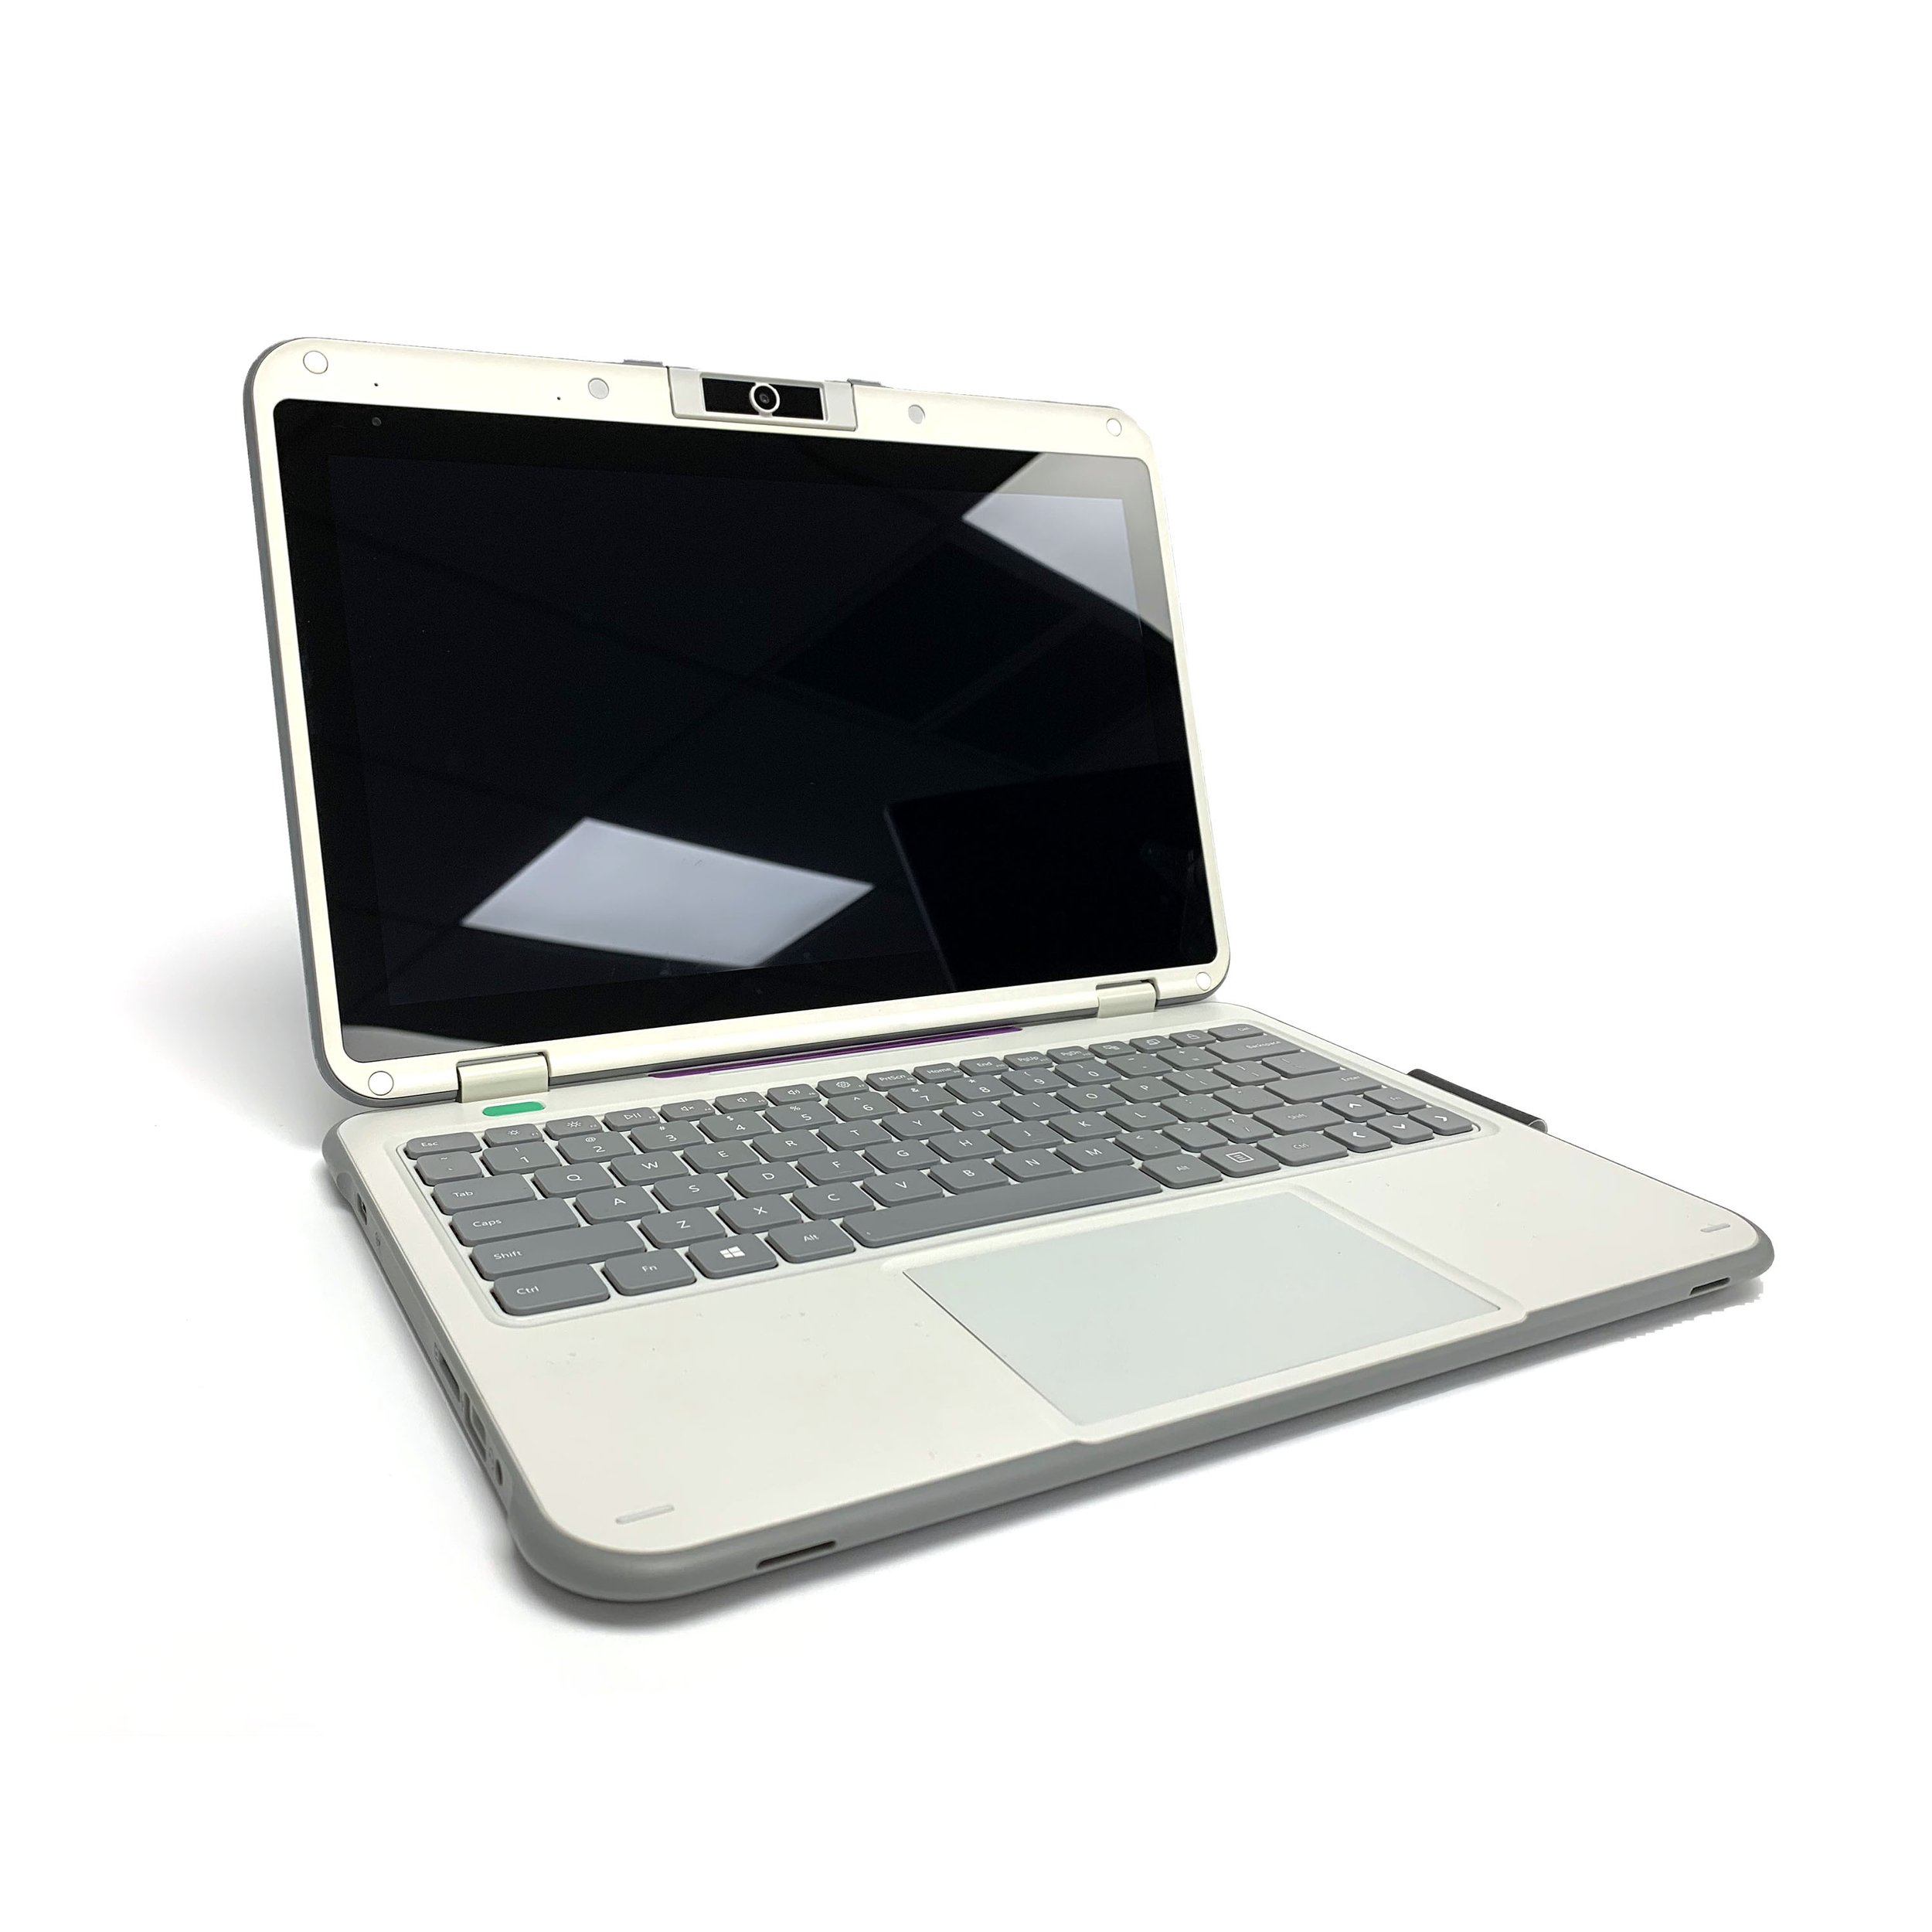 1184-1185-Infinity-Laptop-1.jpg